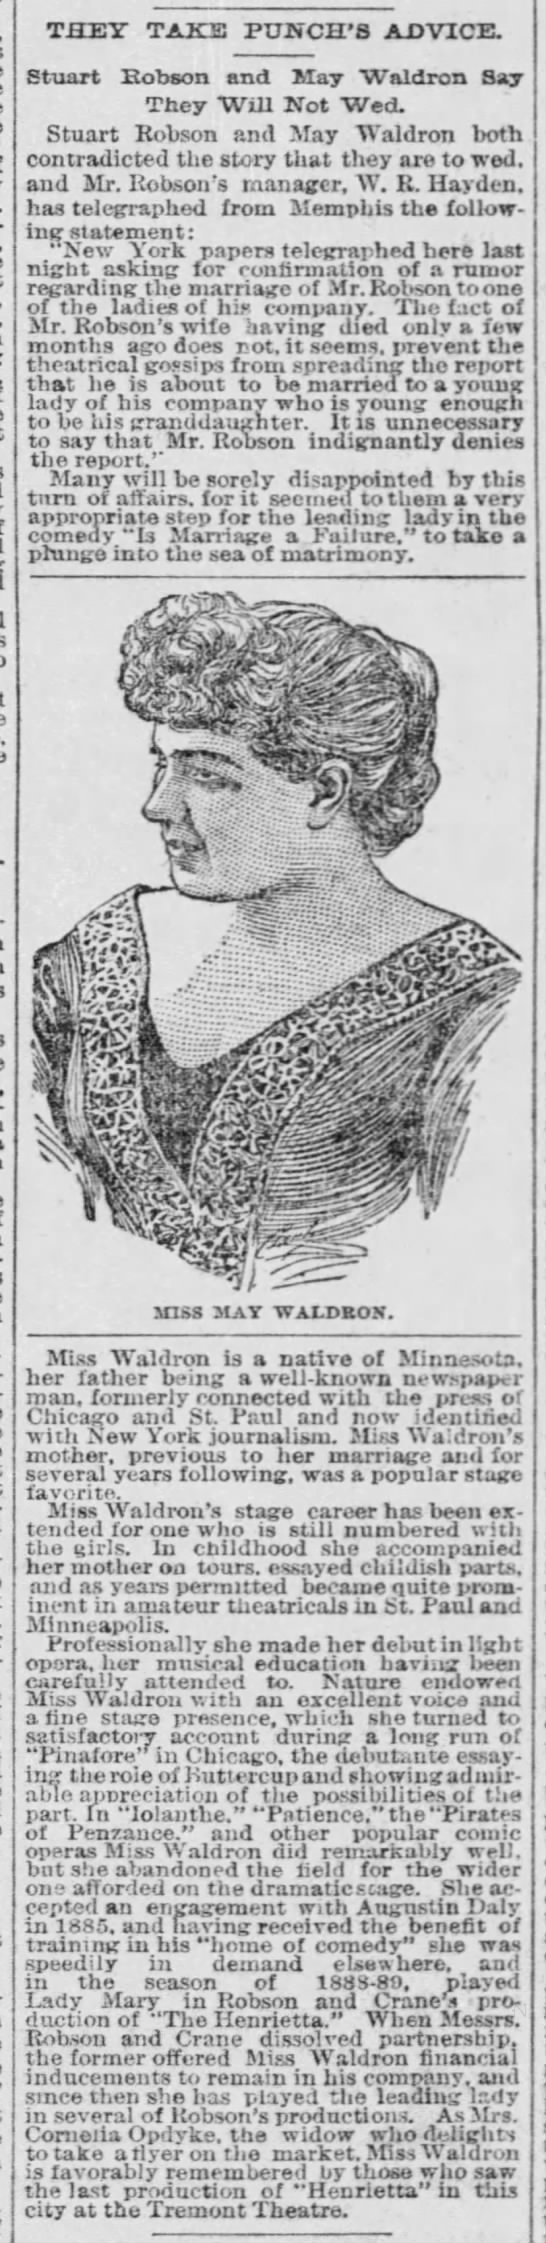 May Waldron 1891 - 